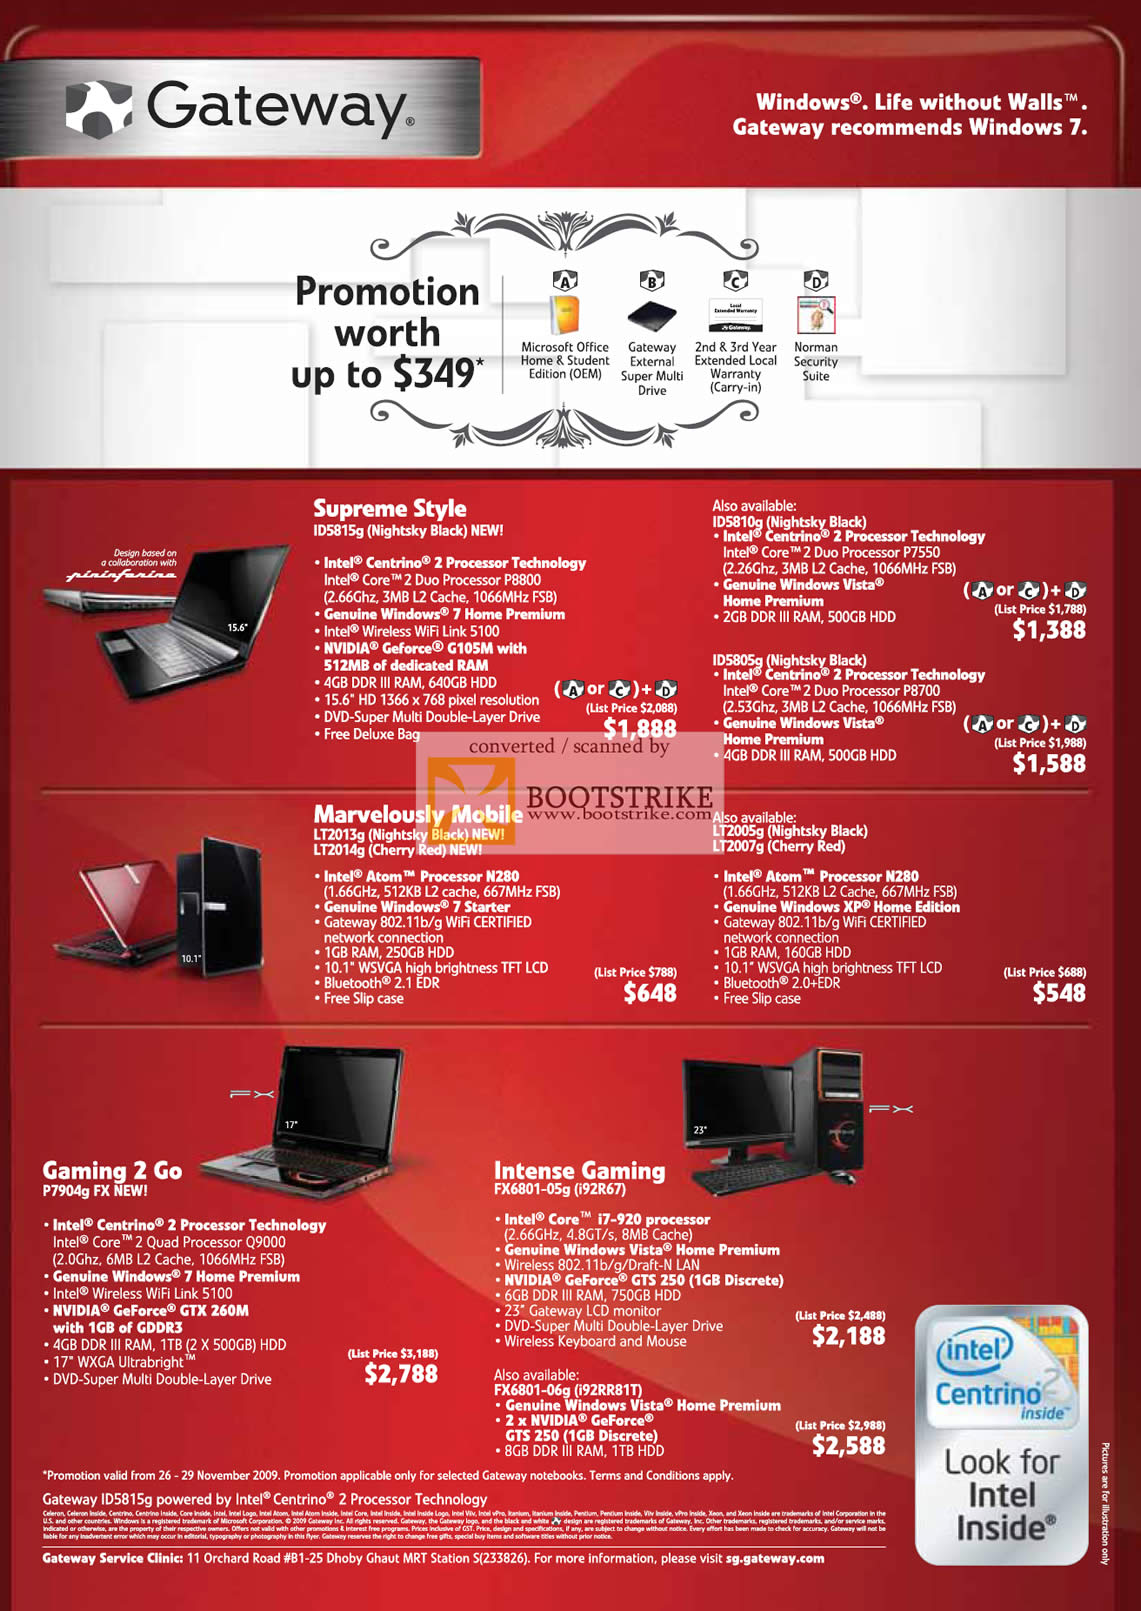 Sitex 2009 price list image brochure of Gateway Notebooks ID5815g LT2005g Gaming Desktop P7904g FX6801